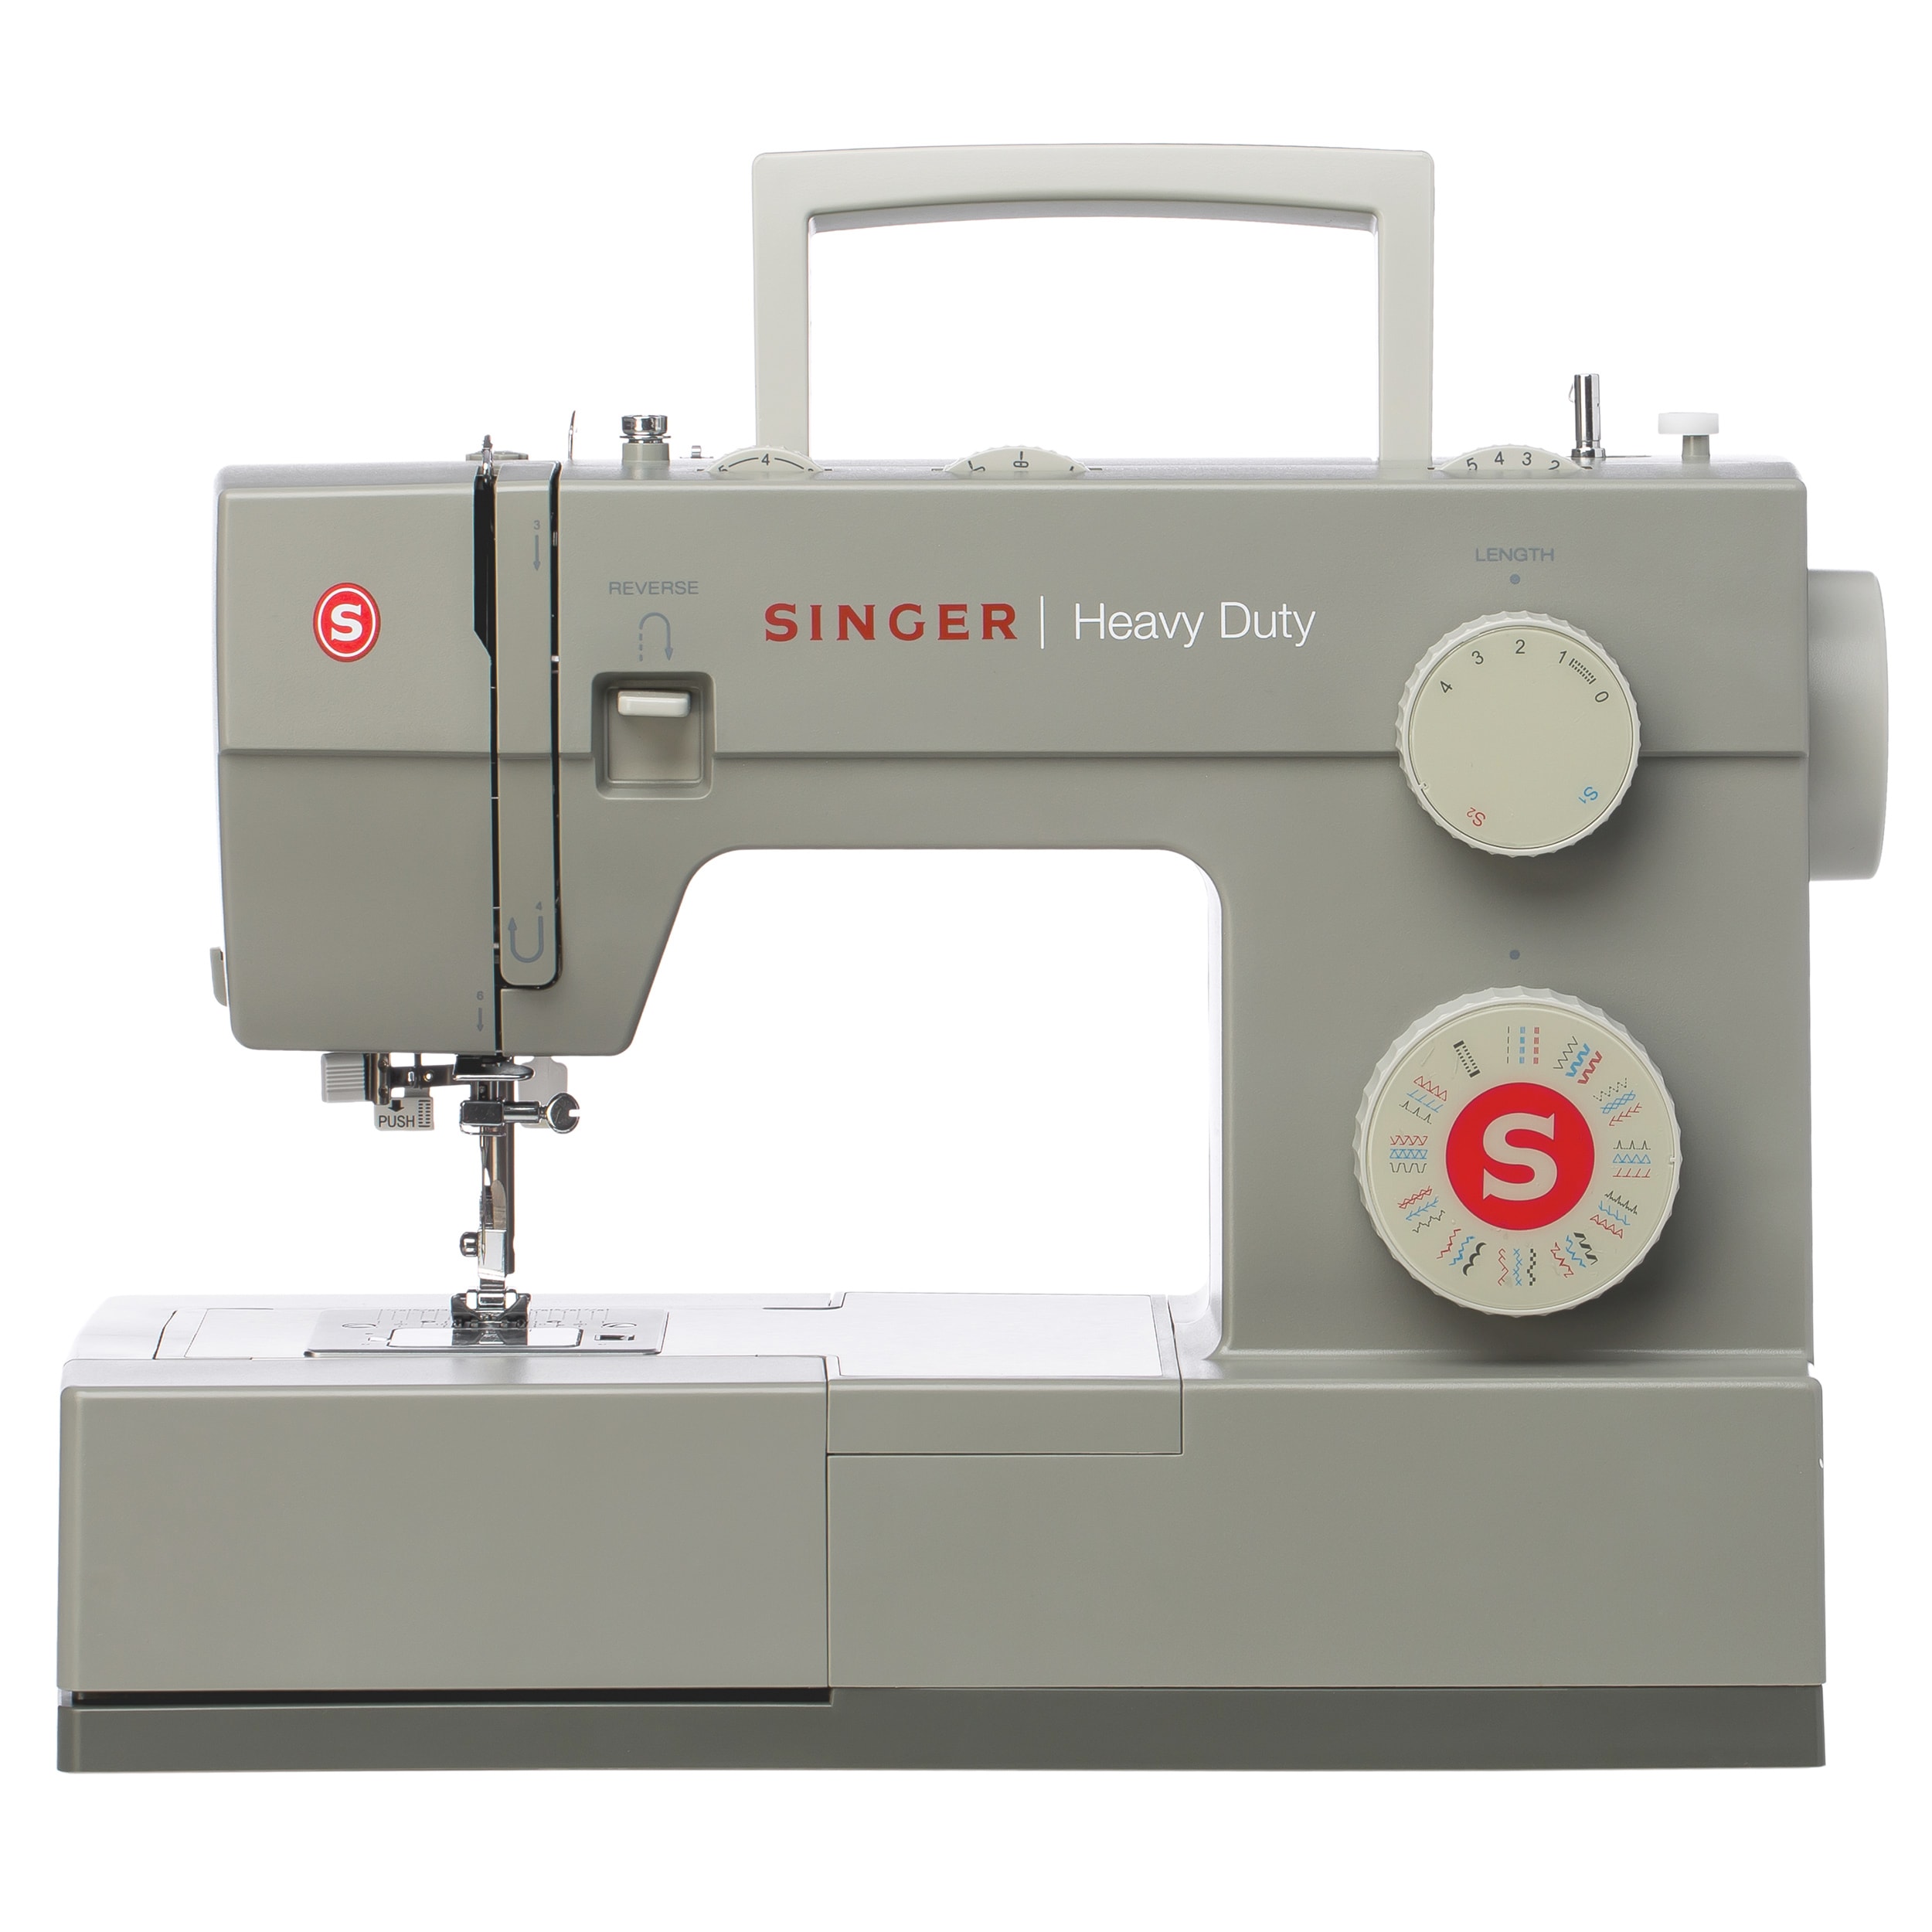 Singer Hd 5532 Heavy Duty Sewing Machine